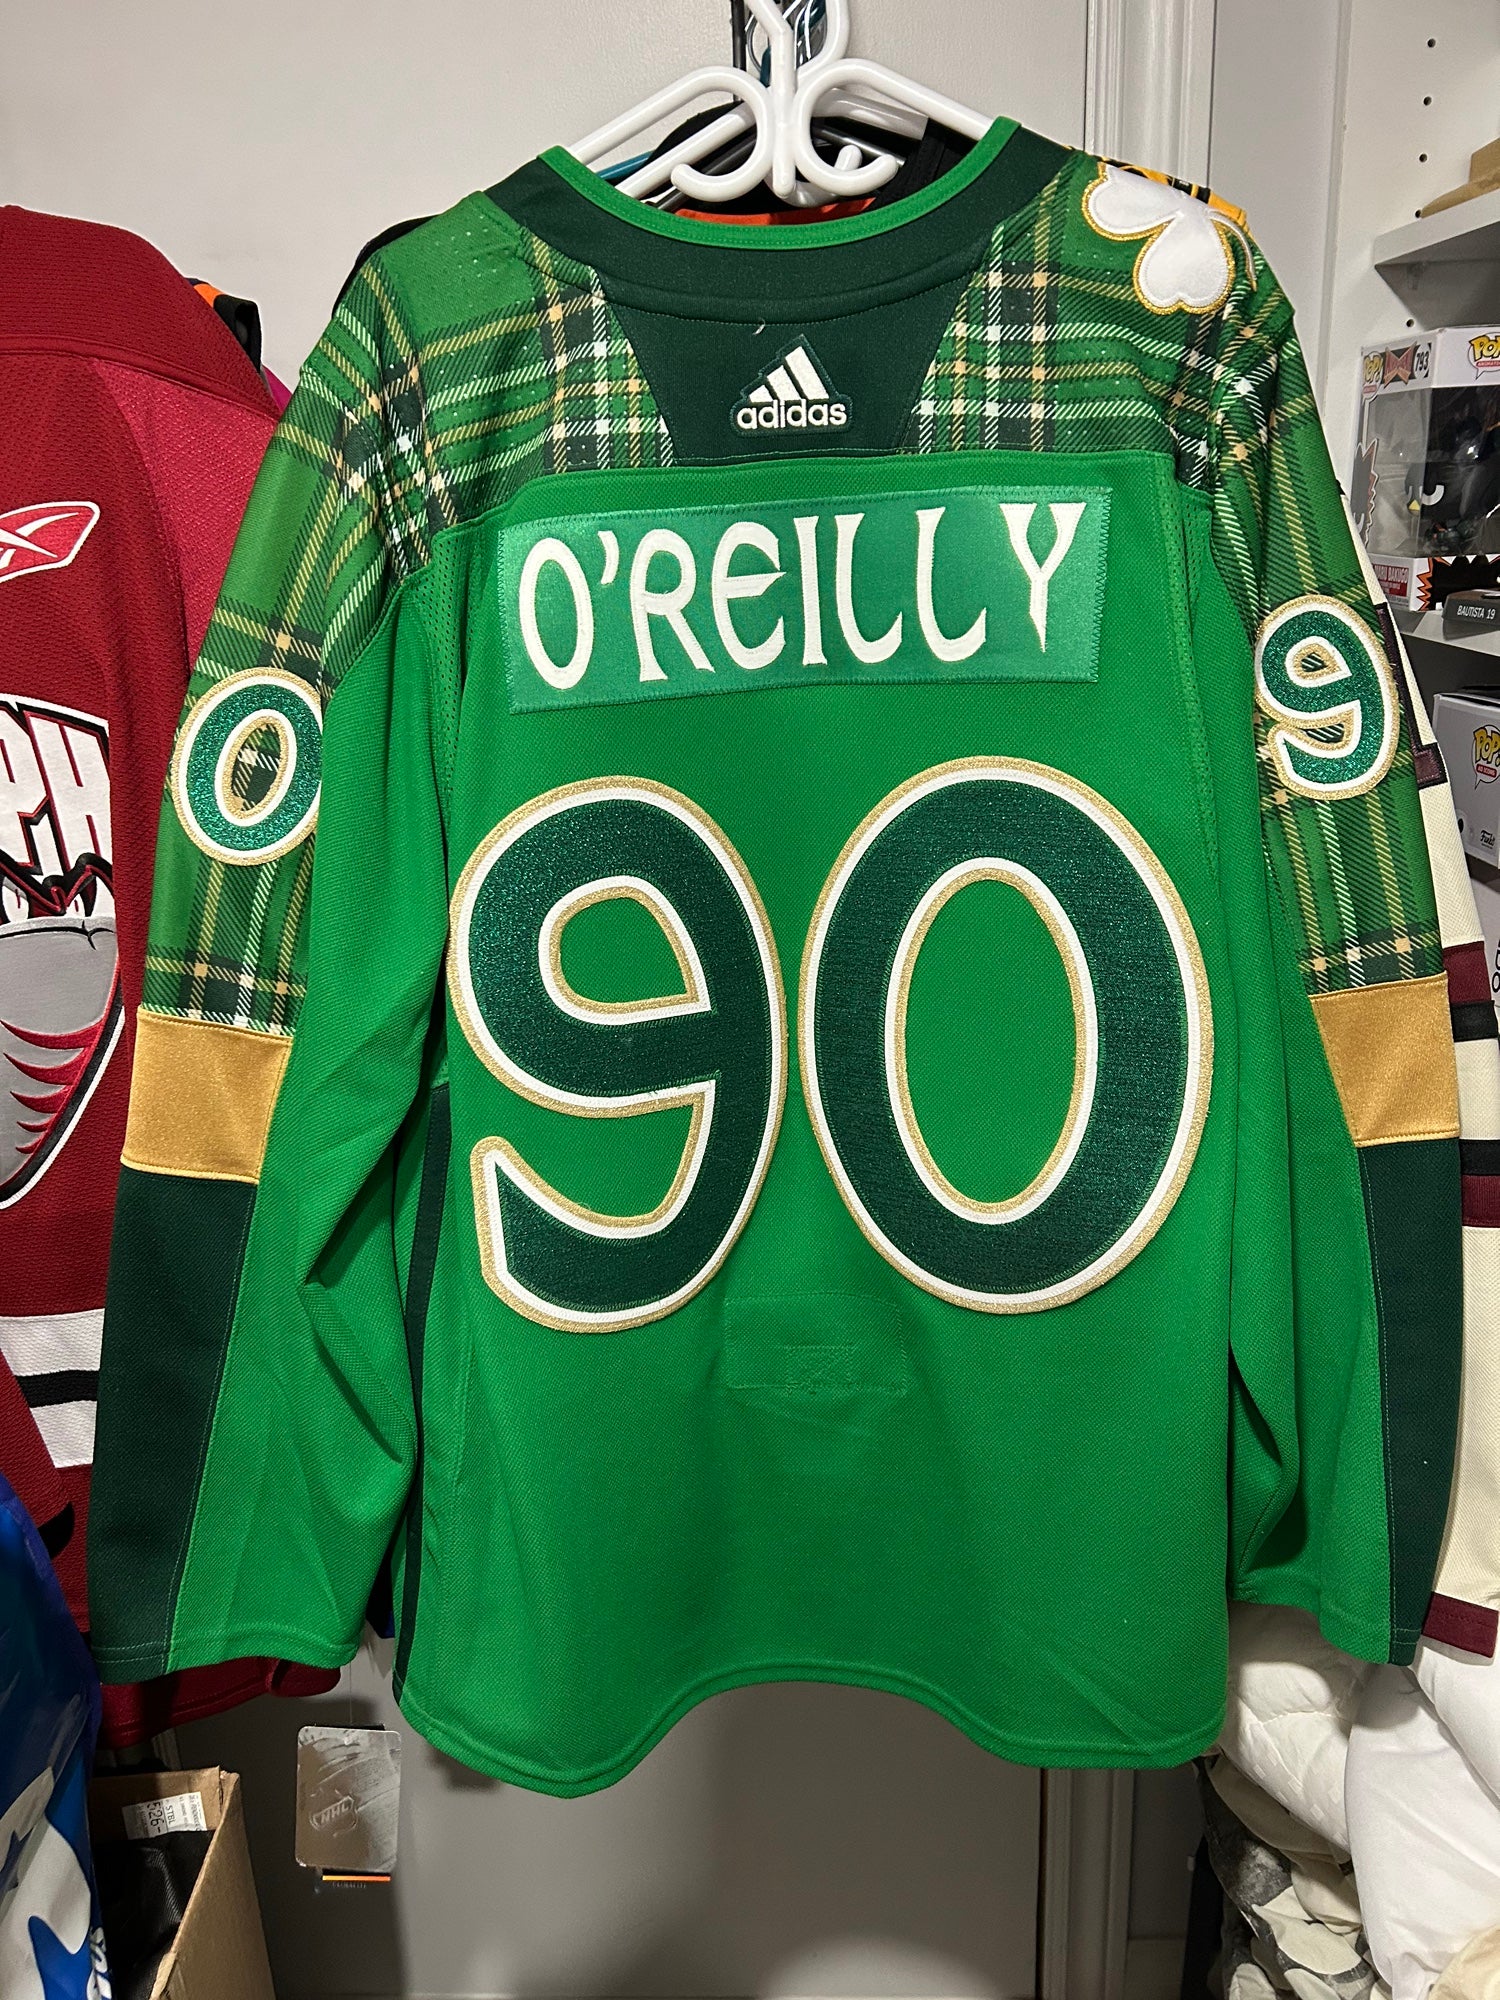 Ryan O'Reilly Jerseys, Ryan O'Reilly Shirts, Apparel, Gear